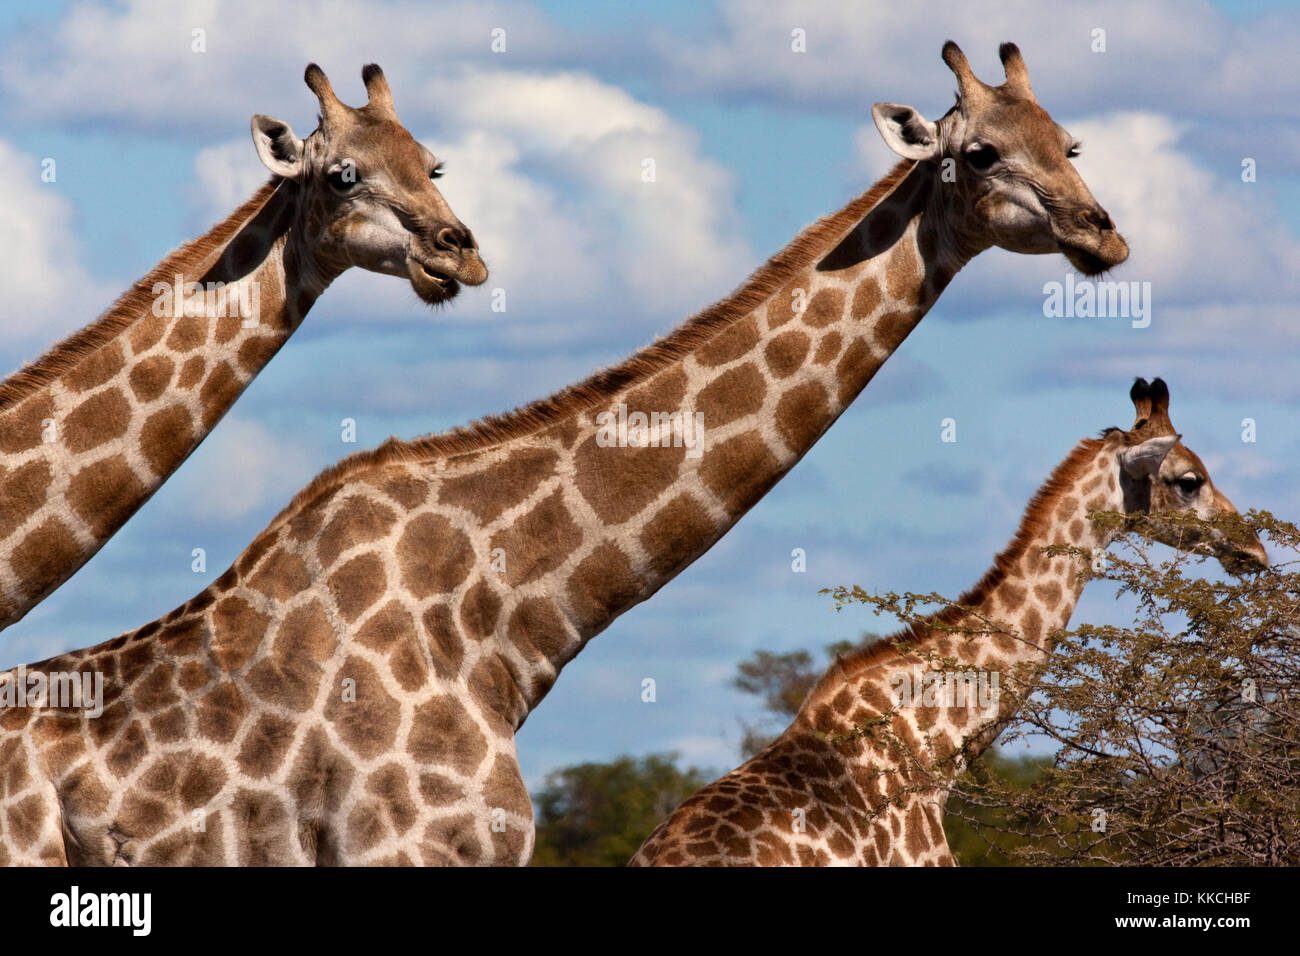 A group of Giraffe (Giraffa camelopardalis) in the Savuti region of northern Botswana Stock Photo